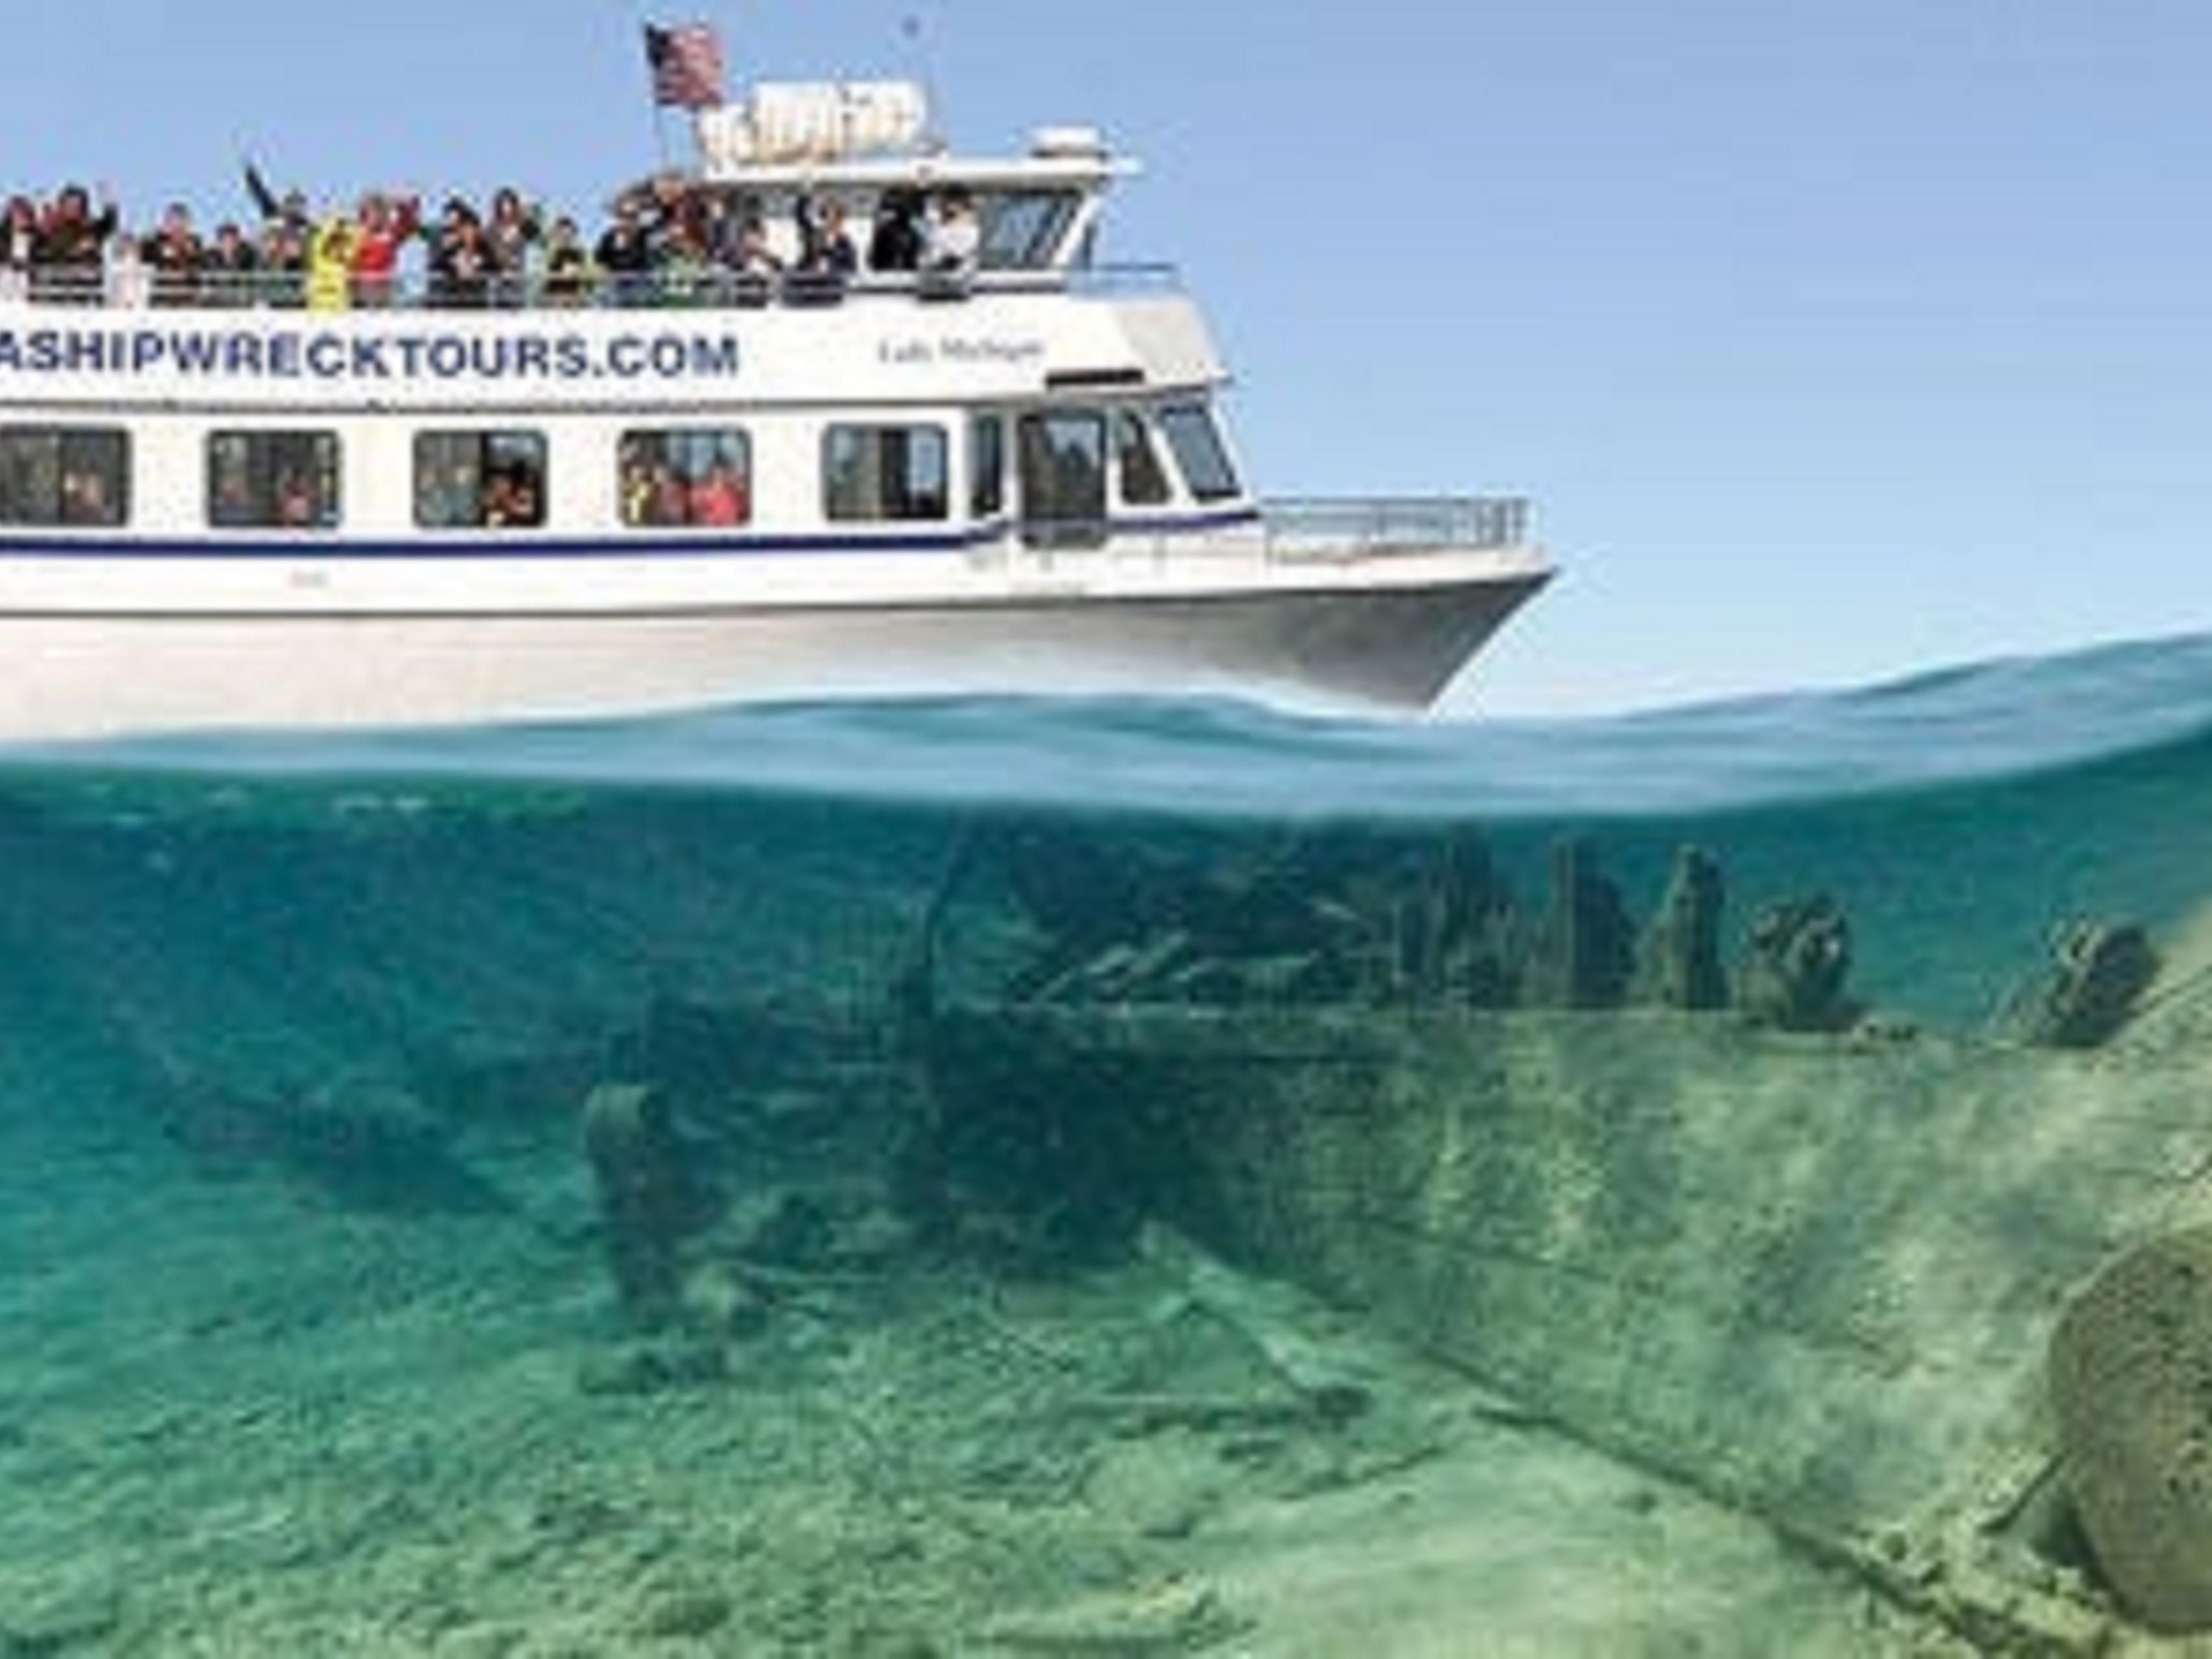 Alpena shipwreck tours now open!